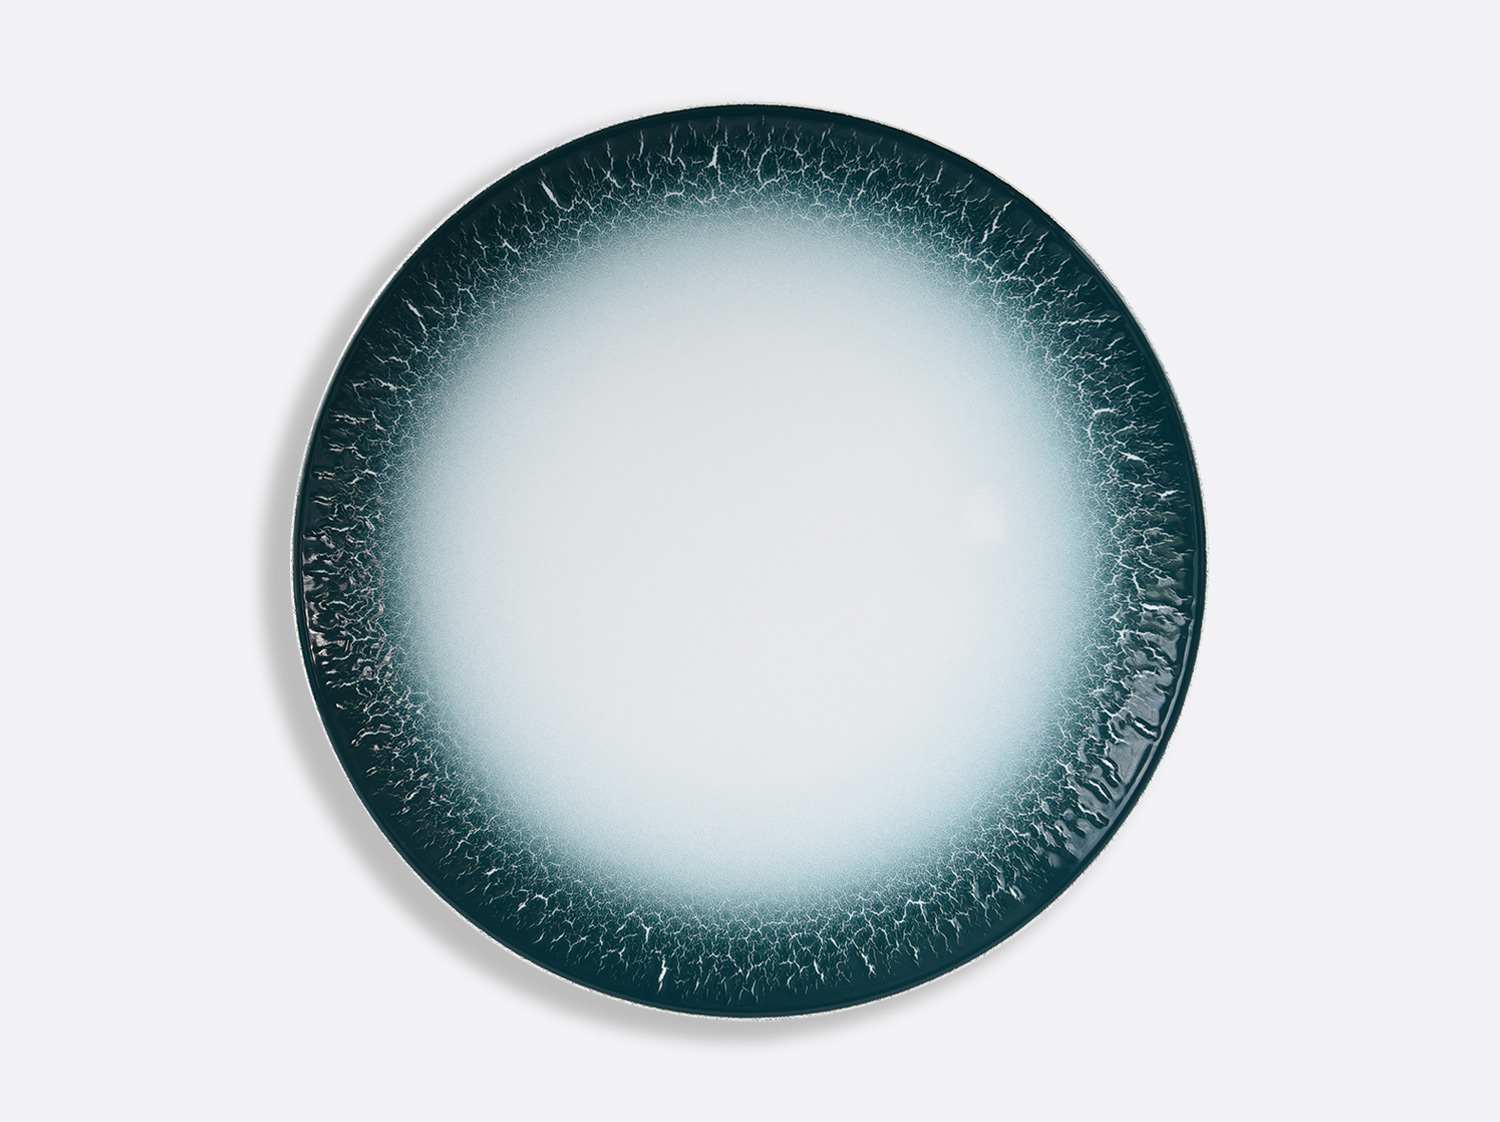 China Ultra flat plate 29.5 cm of the collection TERRA CALANQUE | Bernardaud